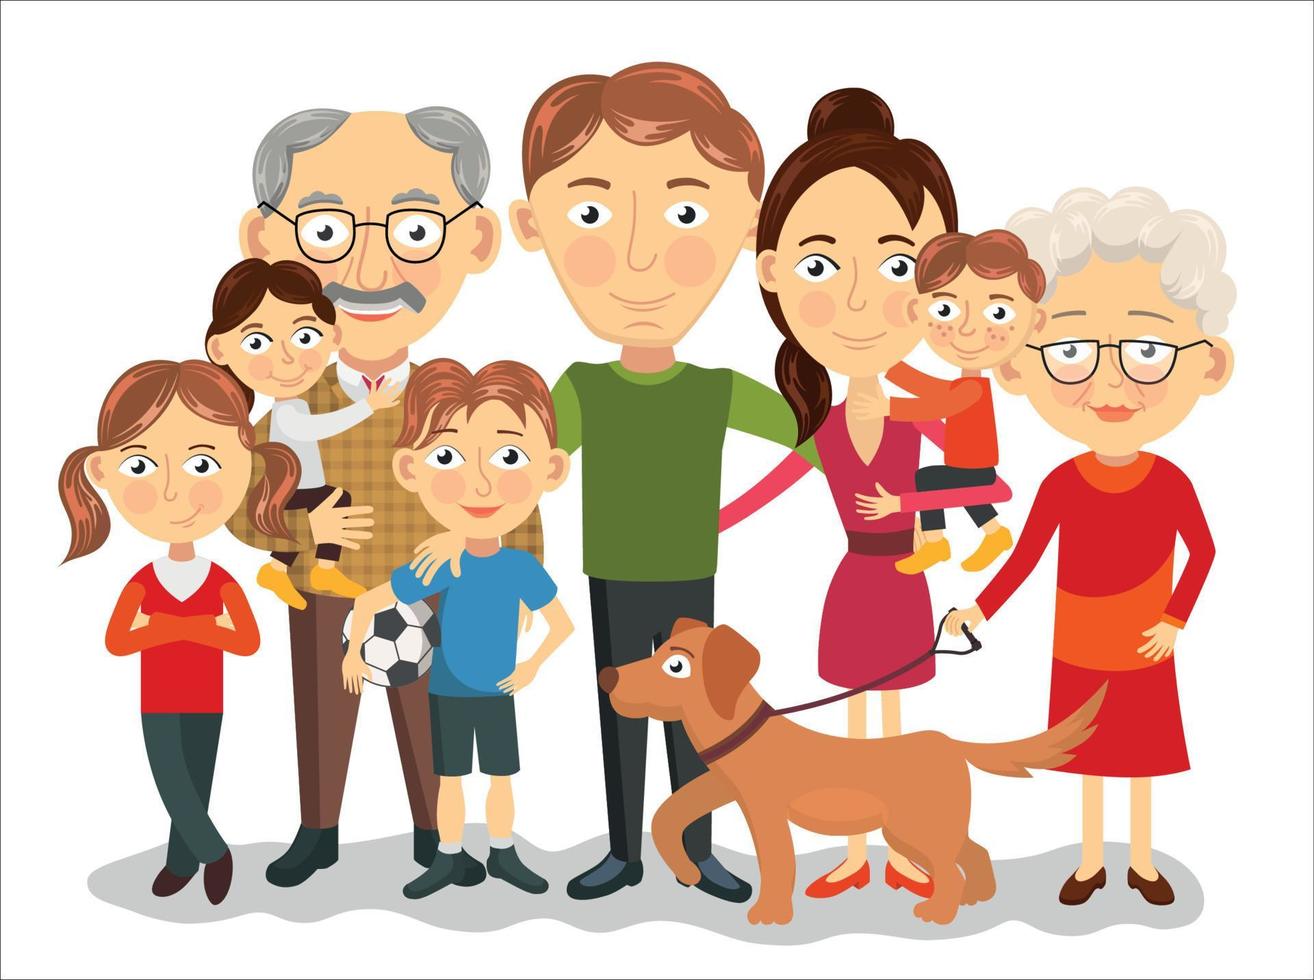 Big and happy family portrait with children, parents, grandparents vector illustration